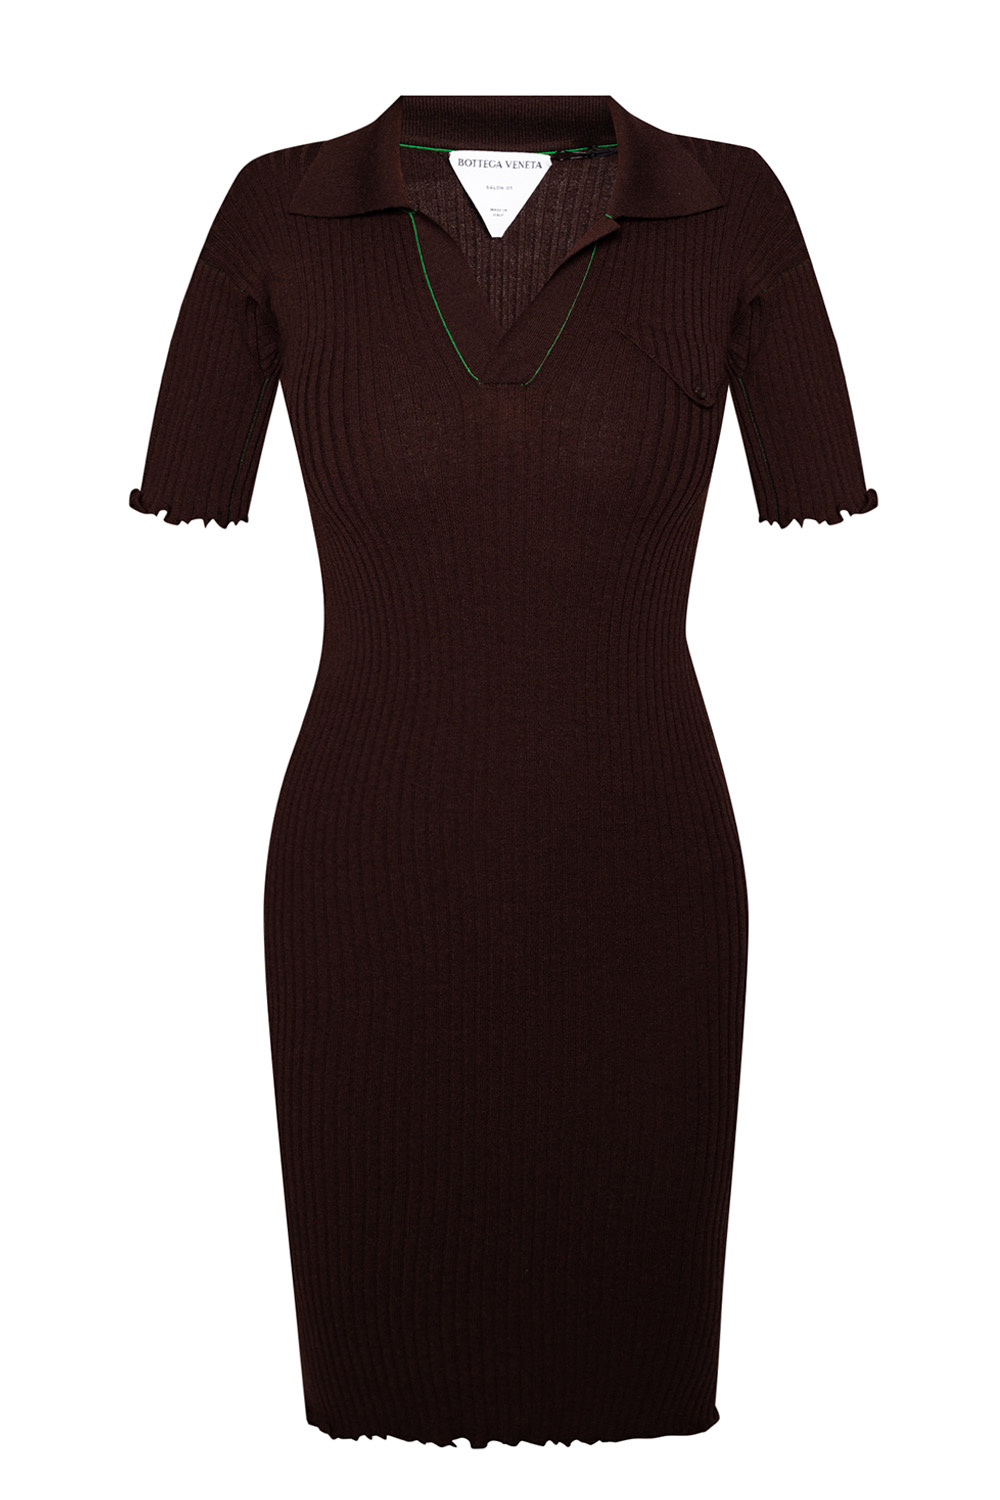 Bottega Veneta Wool dress with short sleeves